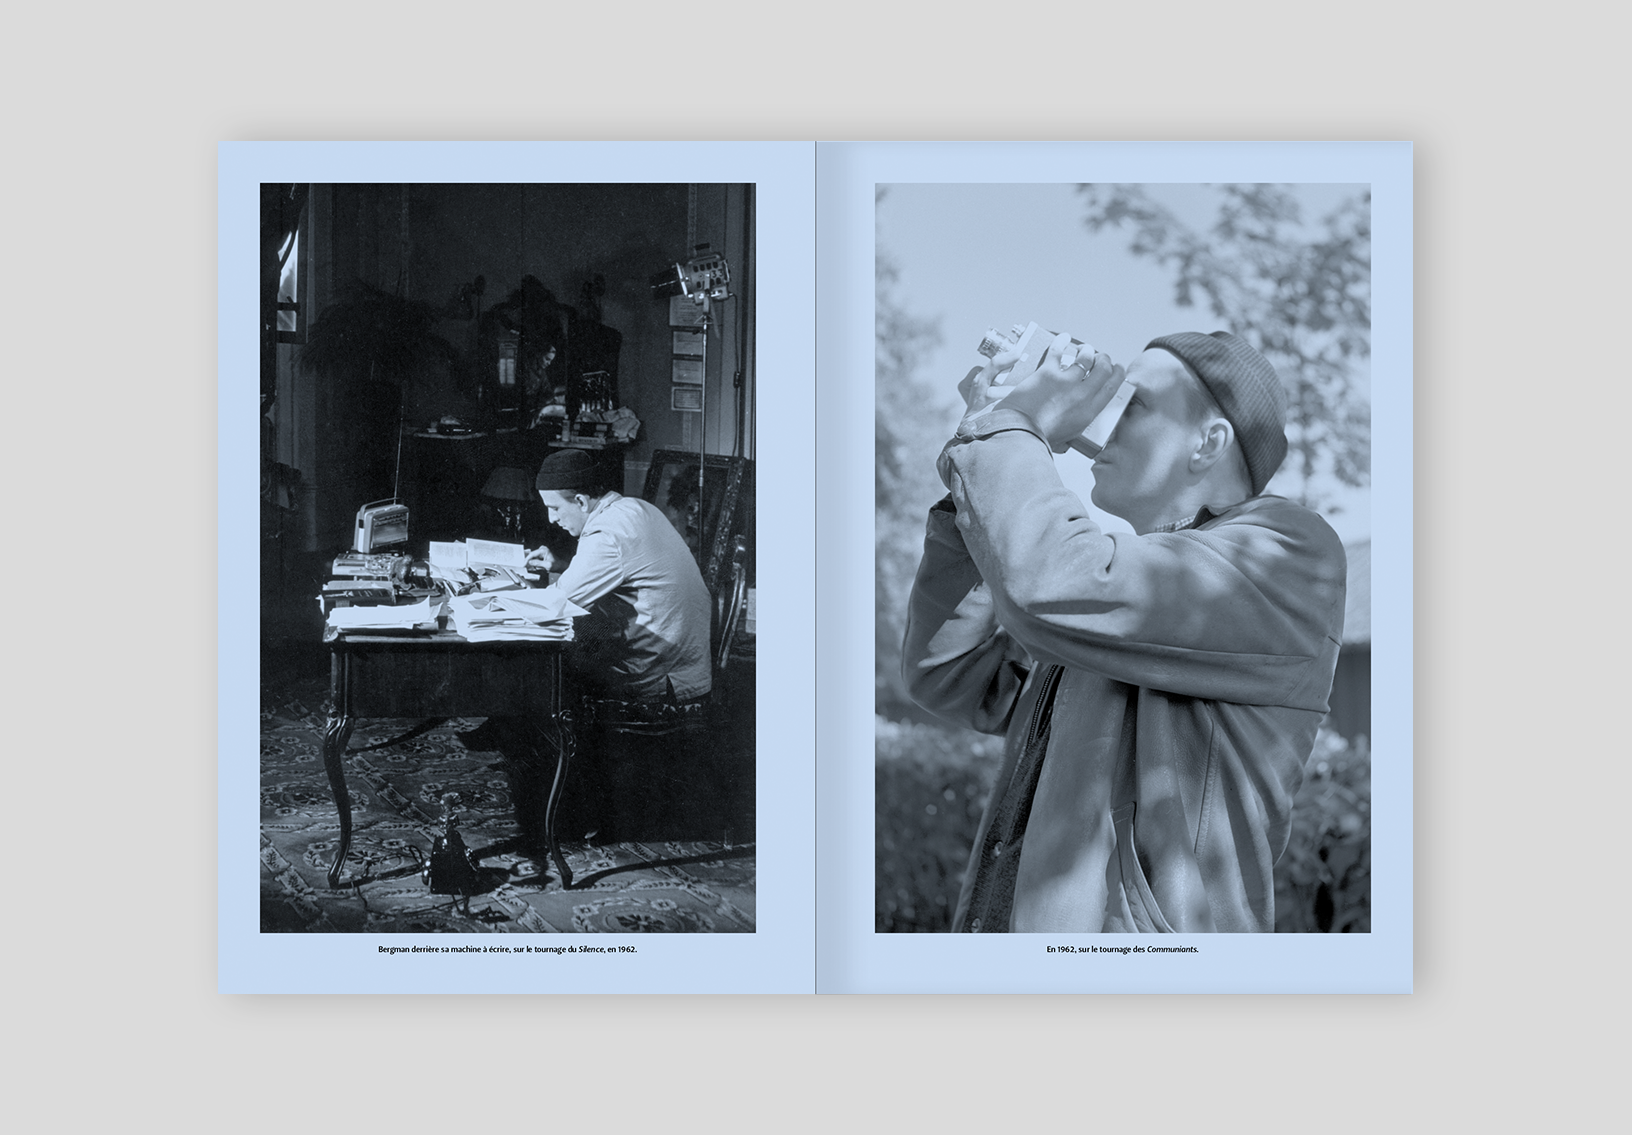 Ingmar Bergman, notebooks 1955-2001 - Book